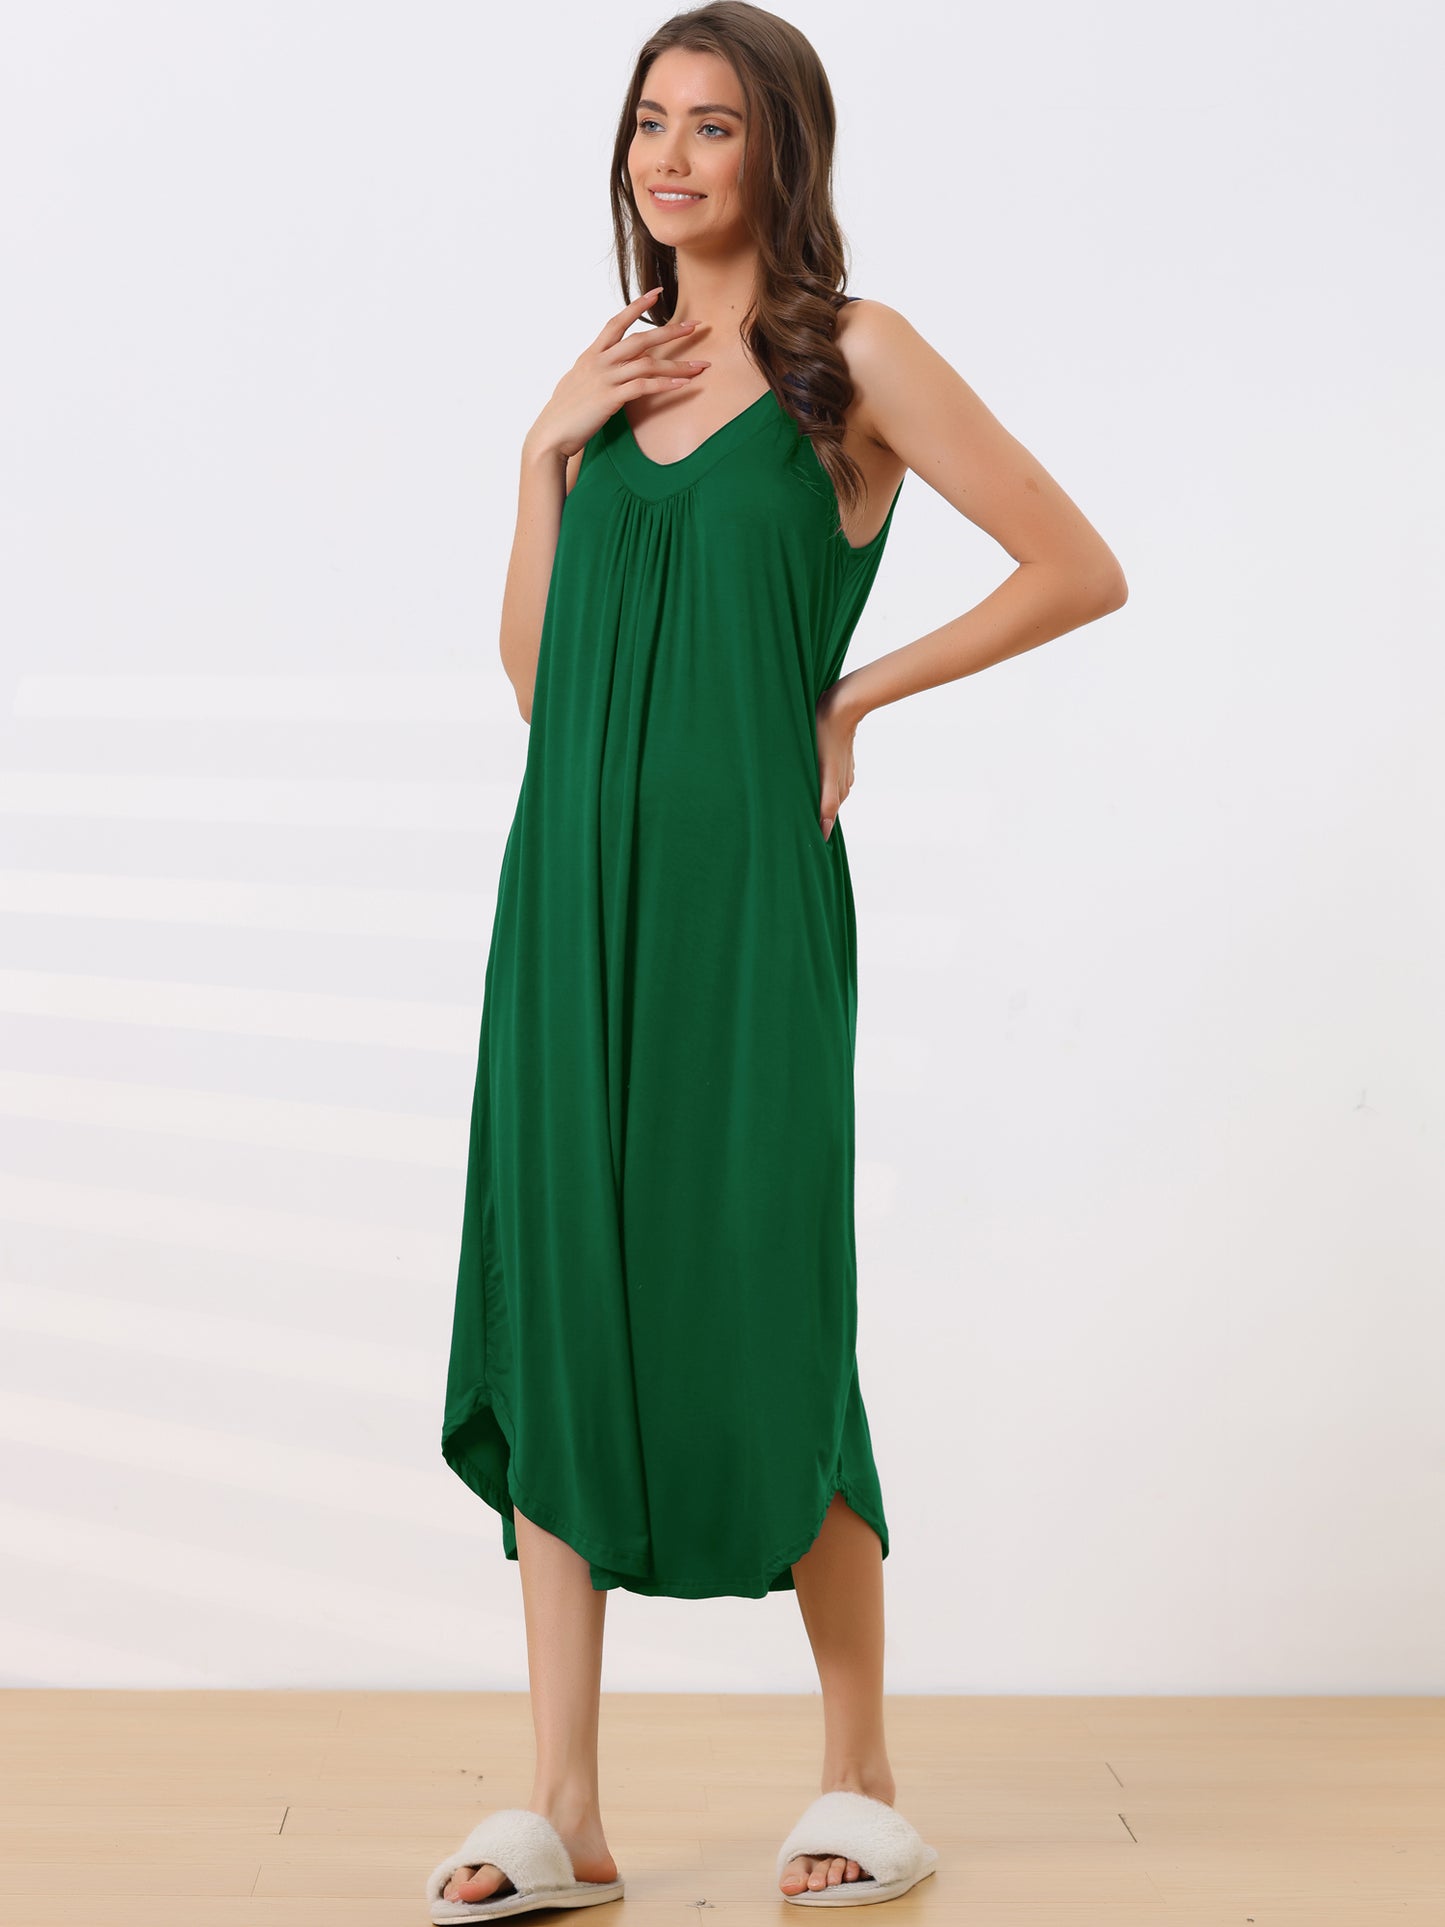 cheibear Pajama V Neck Nightdress Stretchy Lounge Cami Dress Dark Green